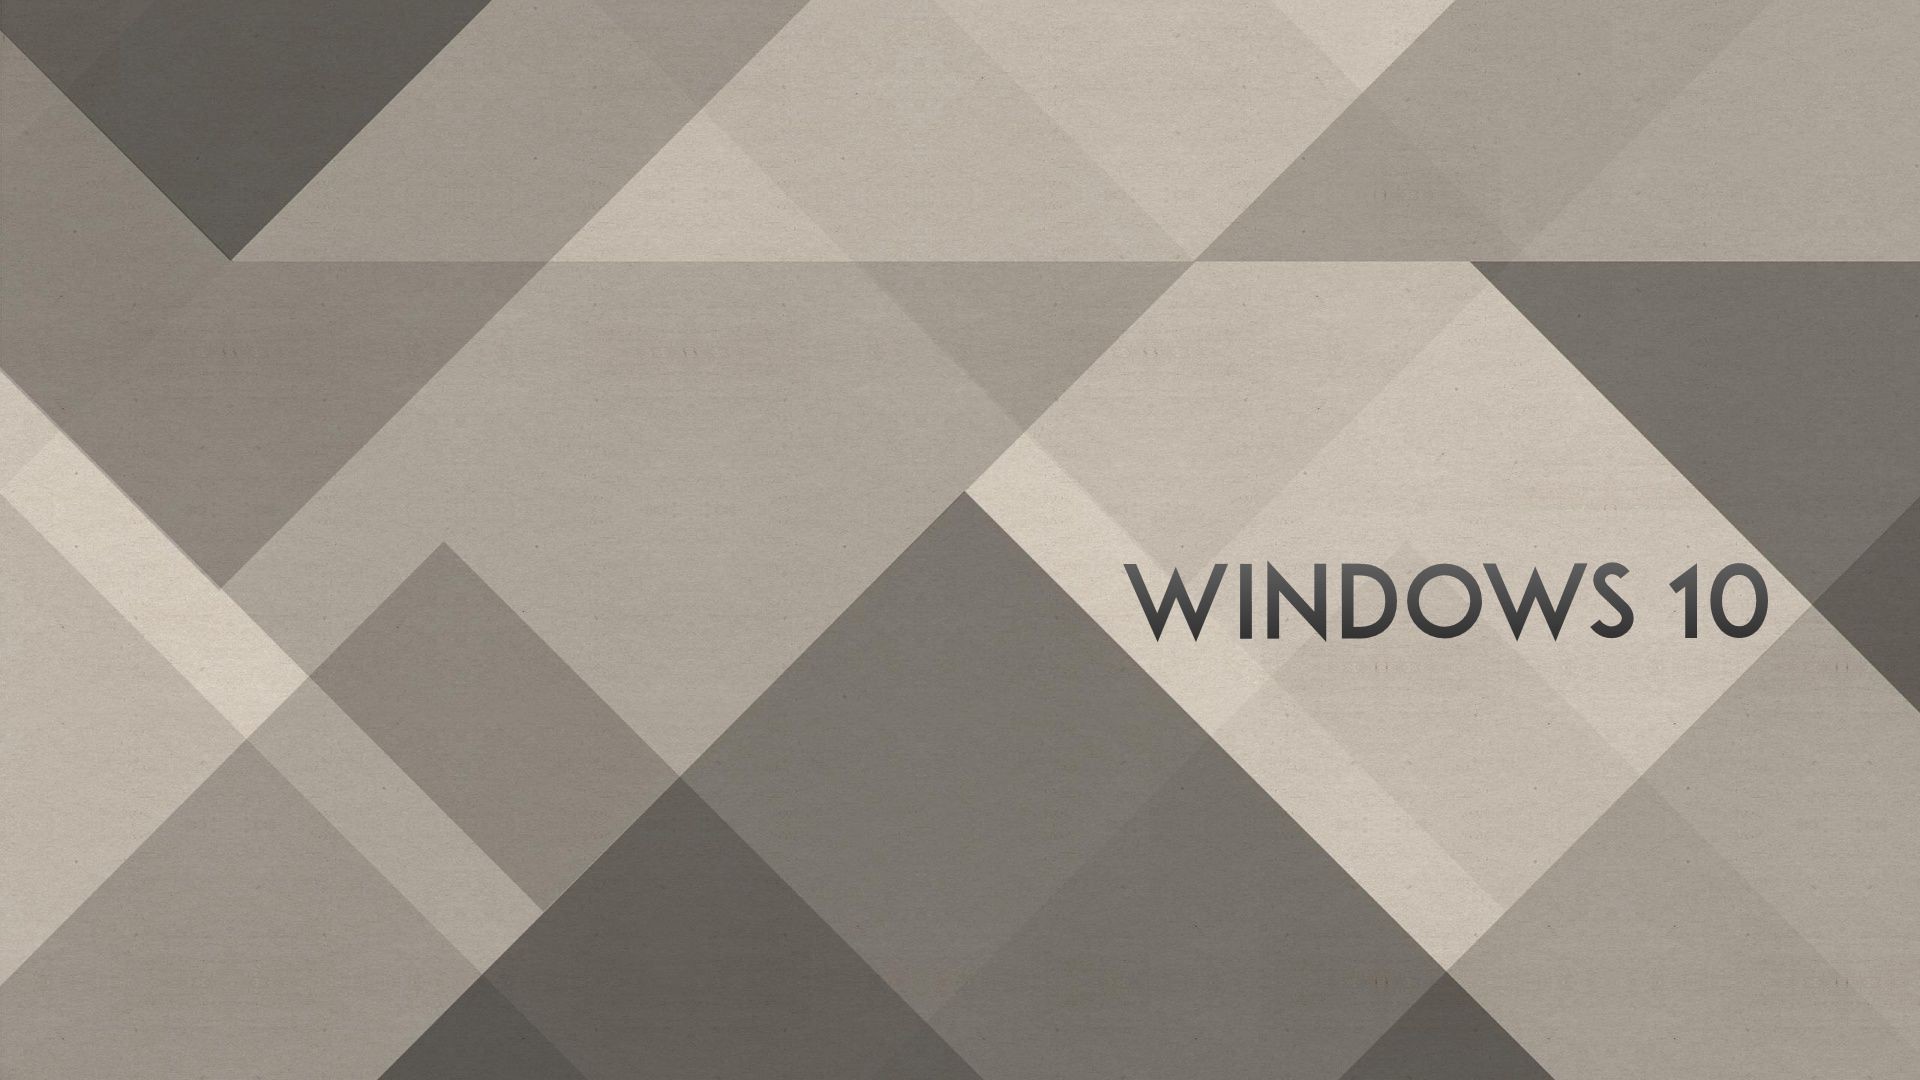 1920x1080 Windows 10 Wallpaper 1080p Full HD Grey Abstract